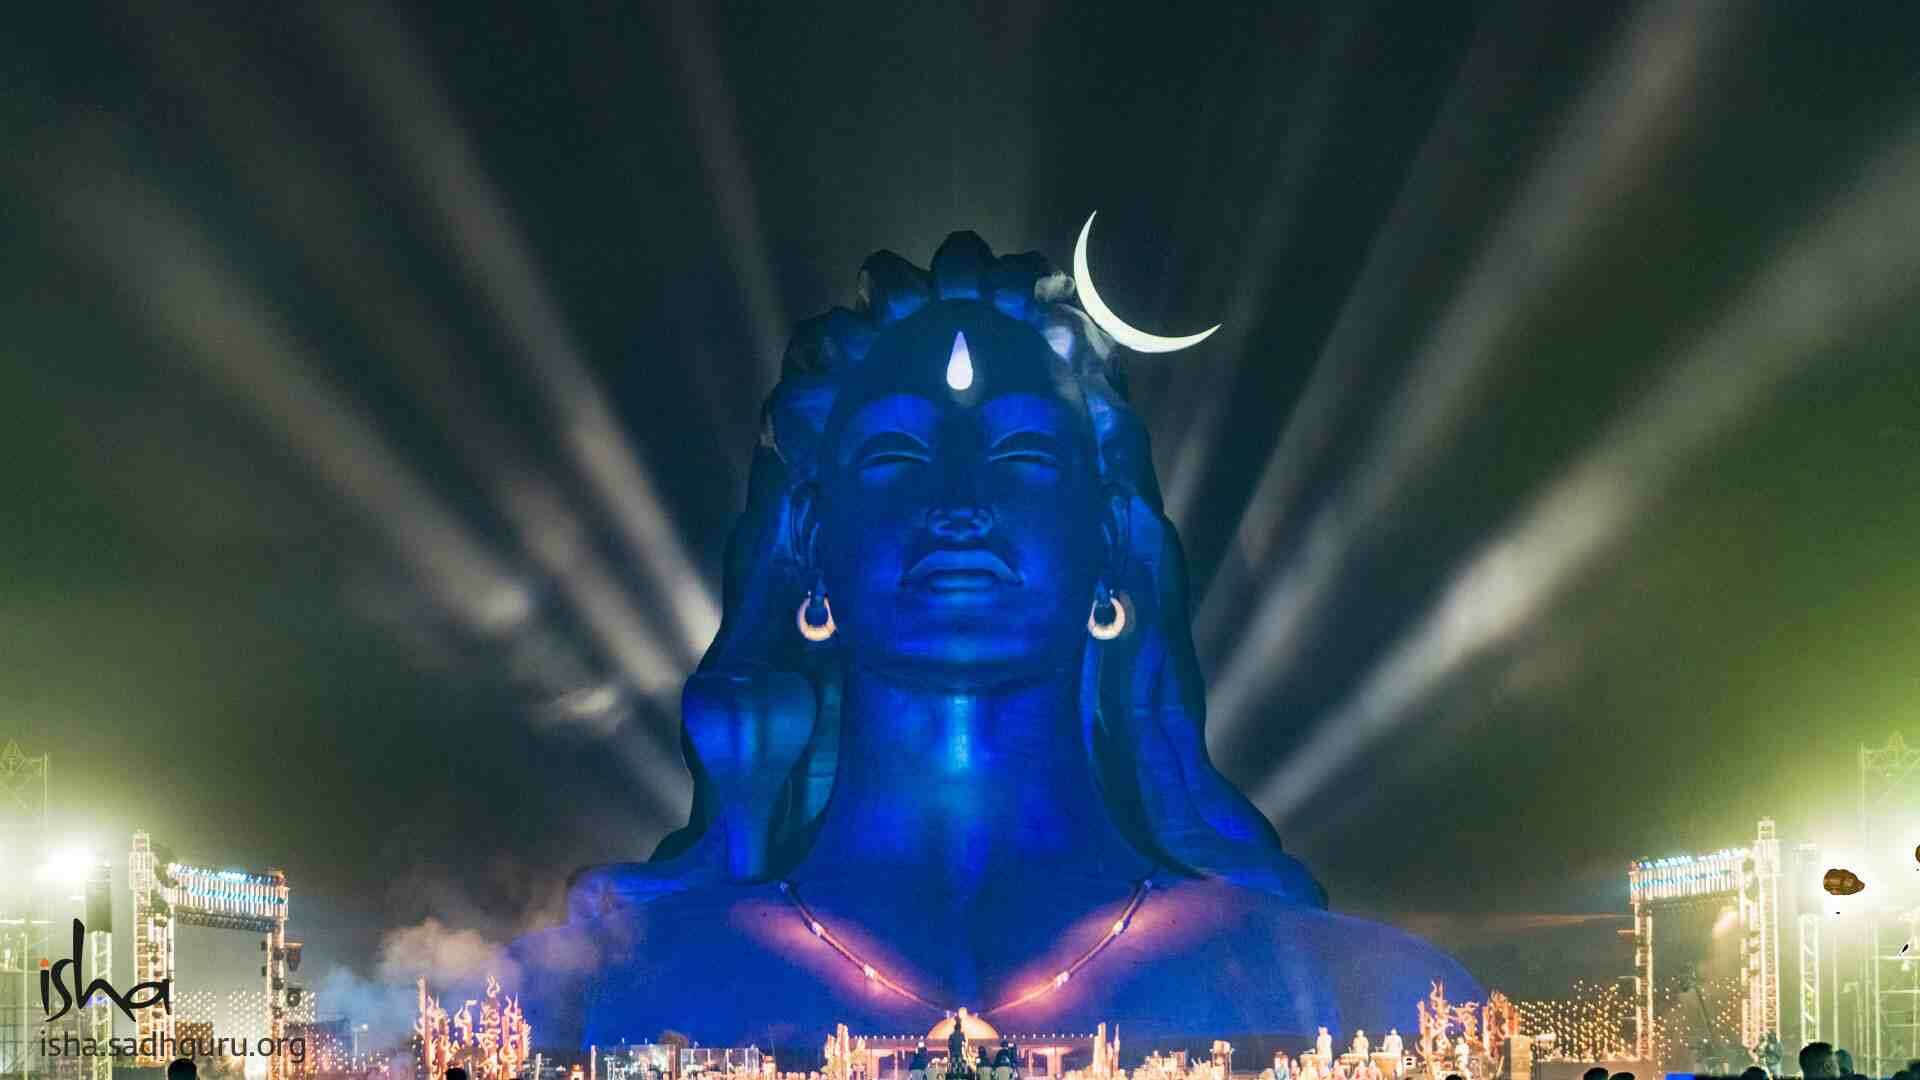 Shiva(Adiyogi) Wallpaper HD Download for Mobile and Desktop